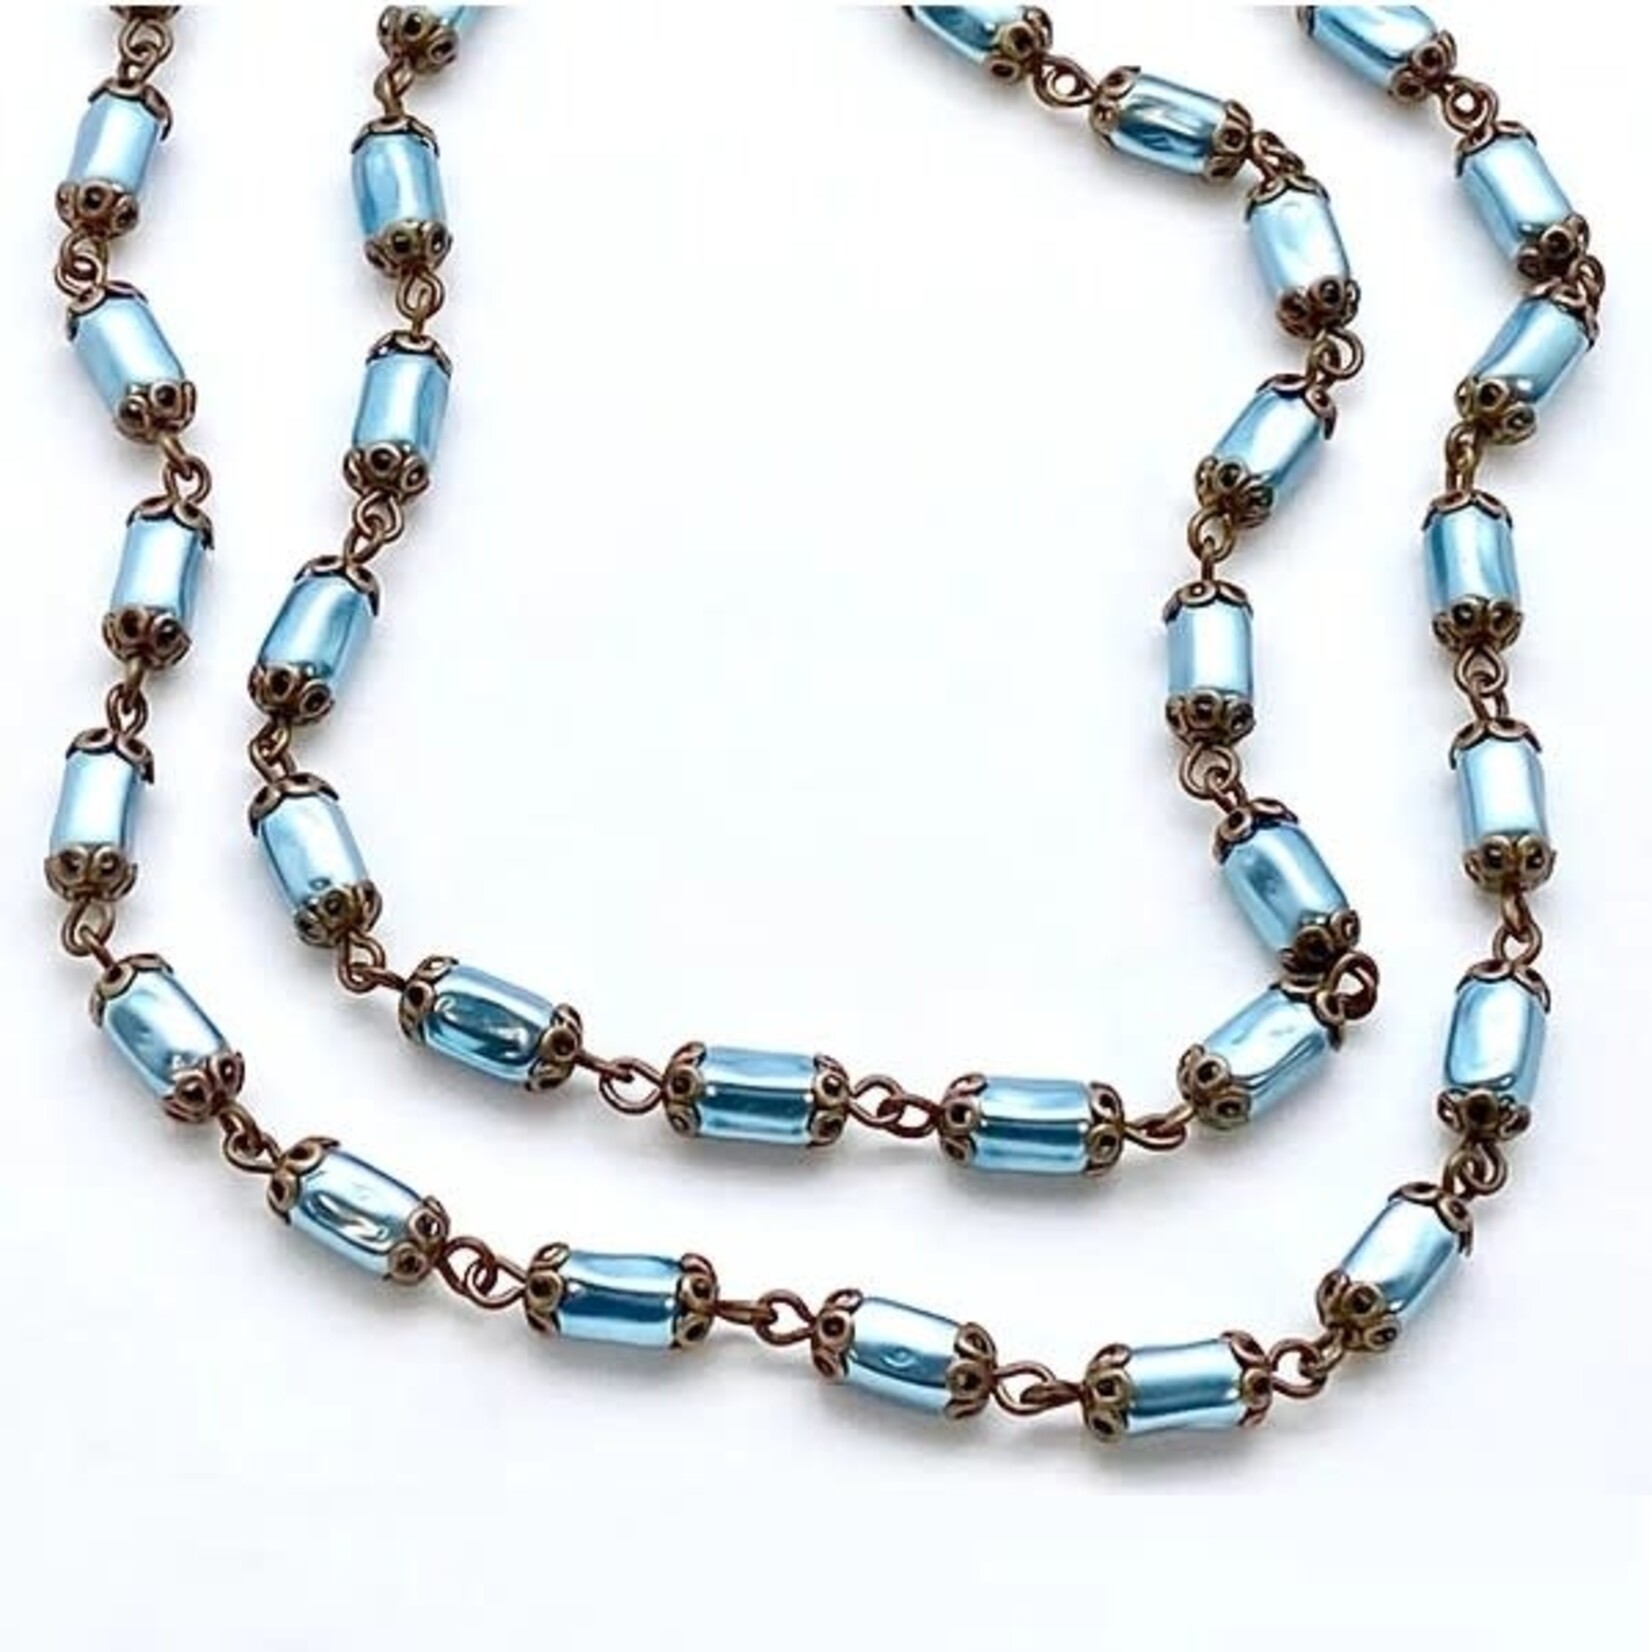 Czech Glass Pearl Blue Rectangle Beaded Chain  - 1 foot